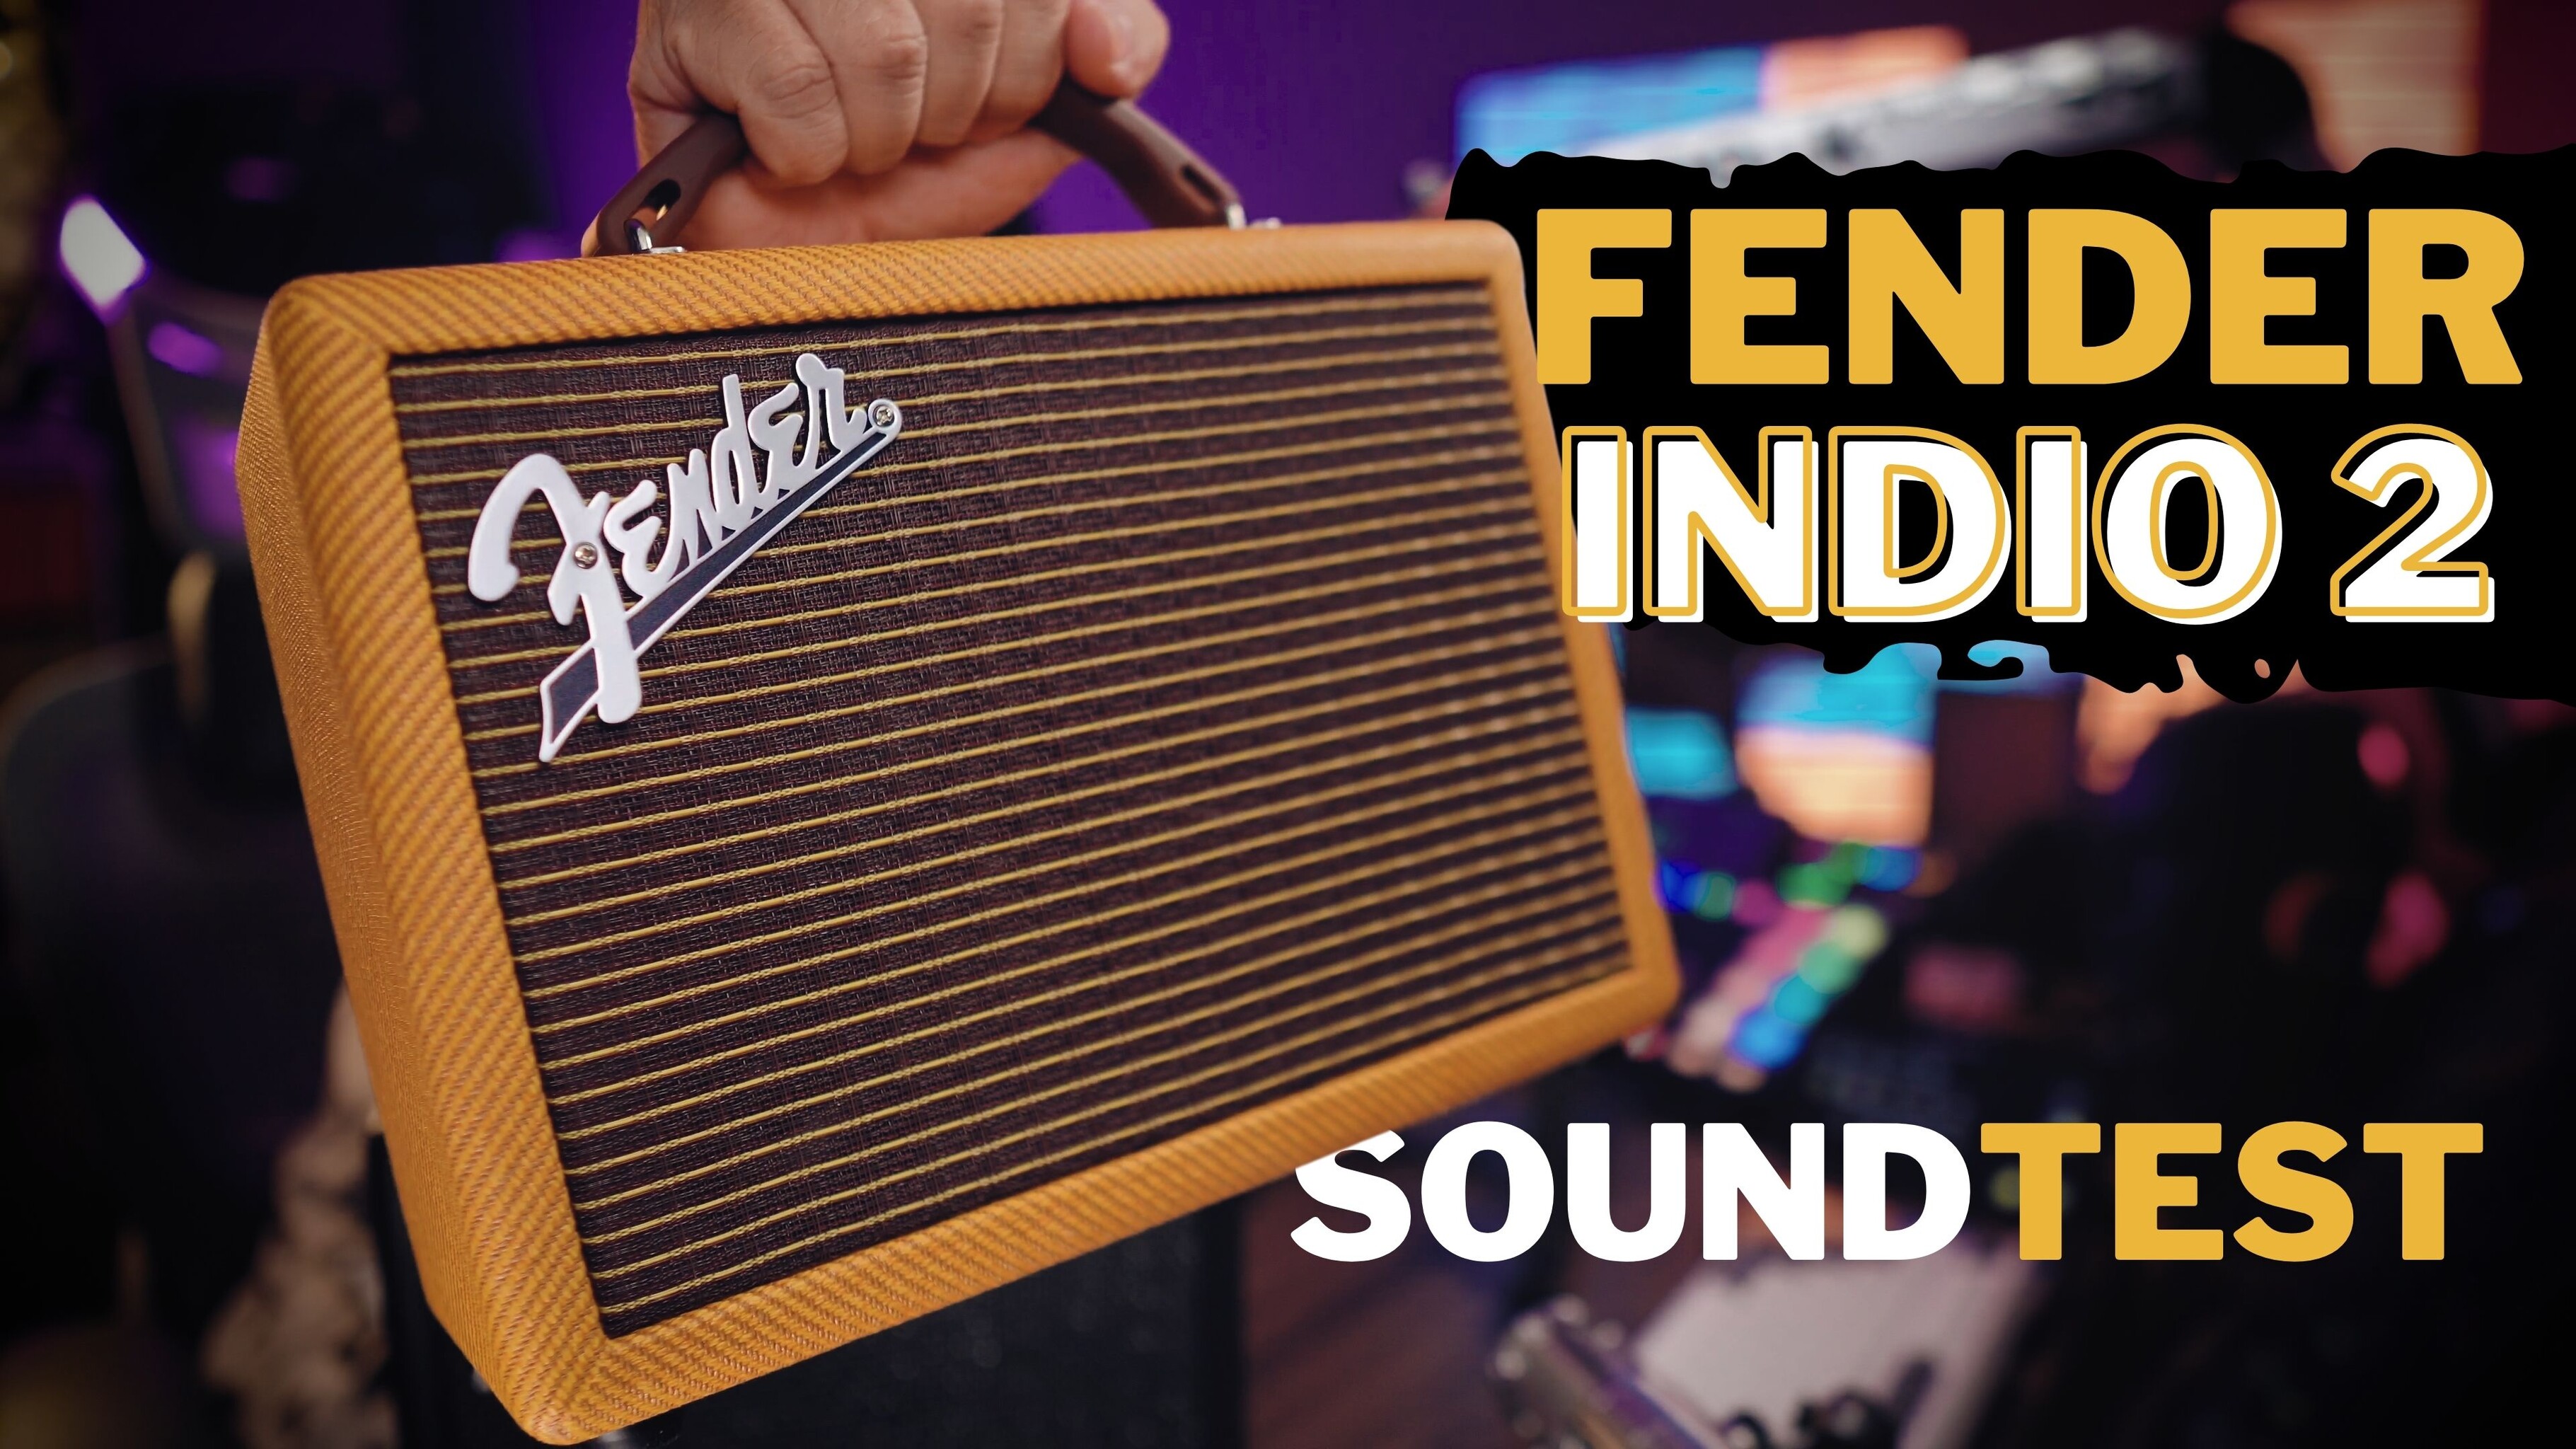 Nghe thử loa Fender indio 2